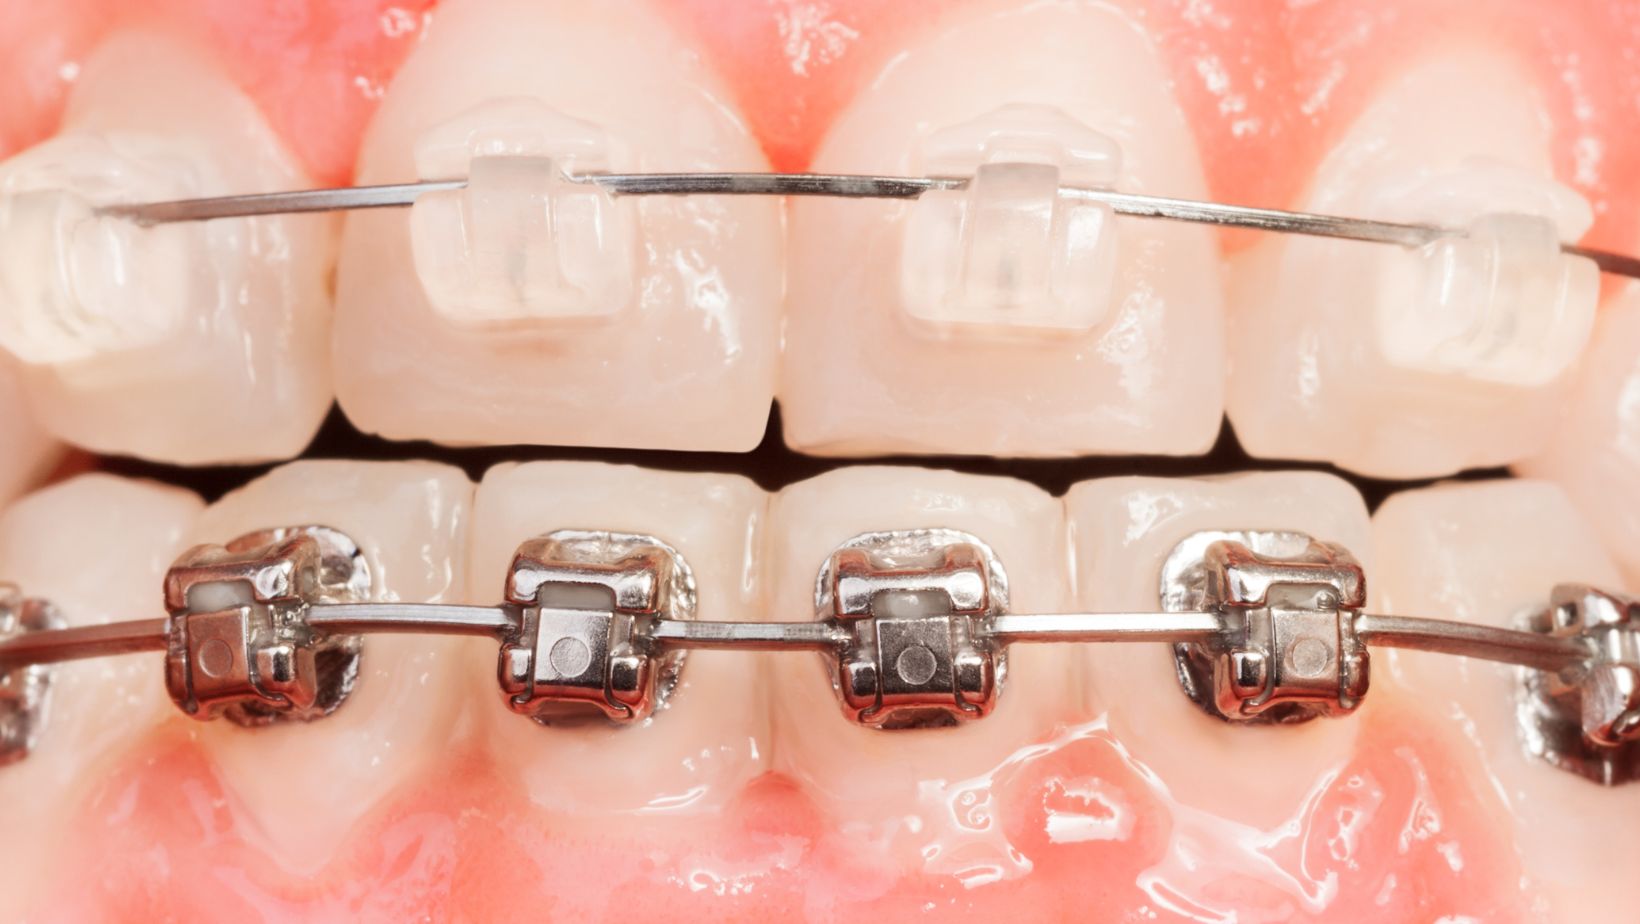 Protège-dents, appareils orthodontiques Invisible 3 étapes